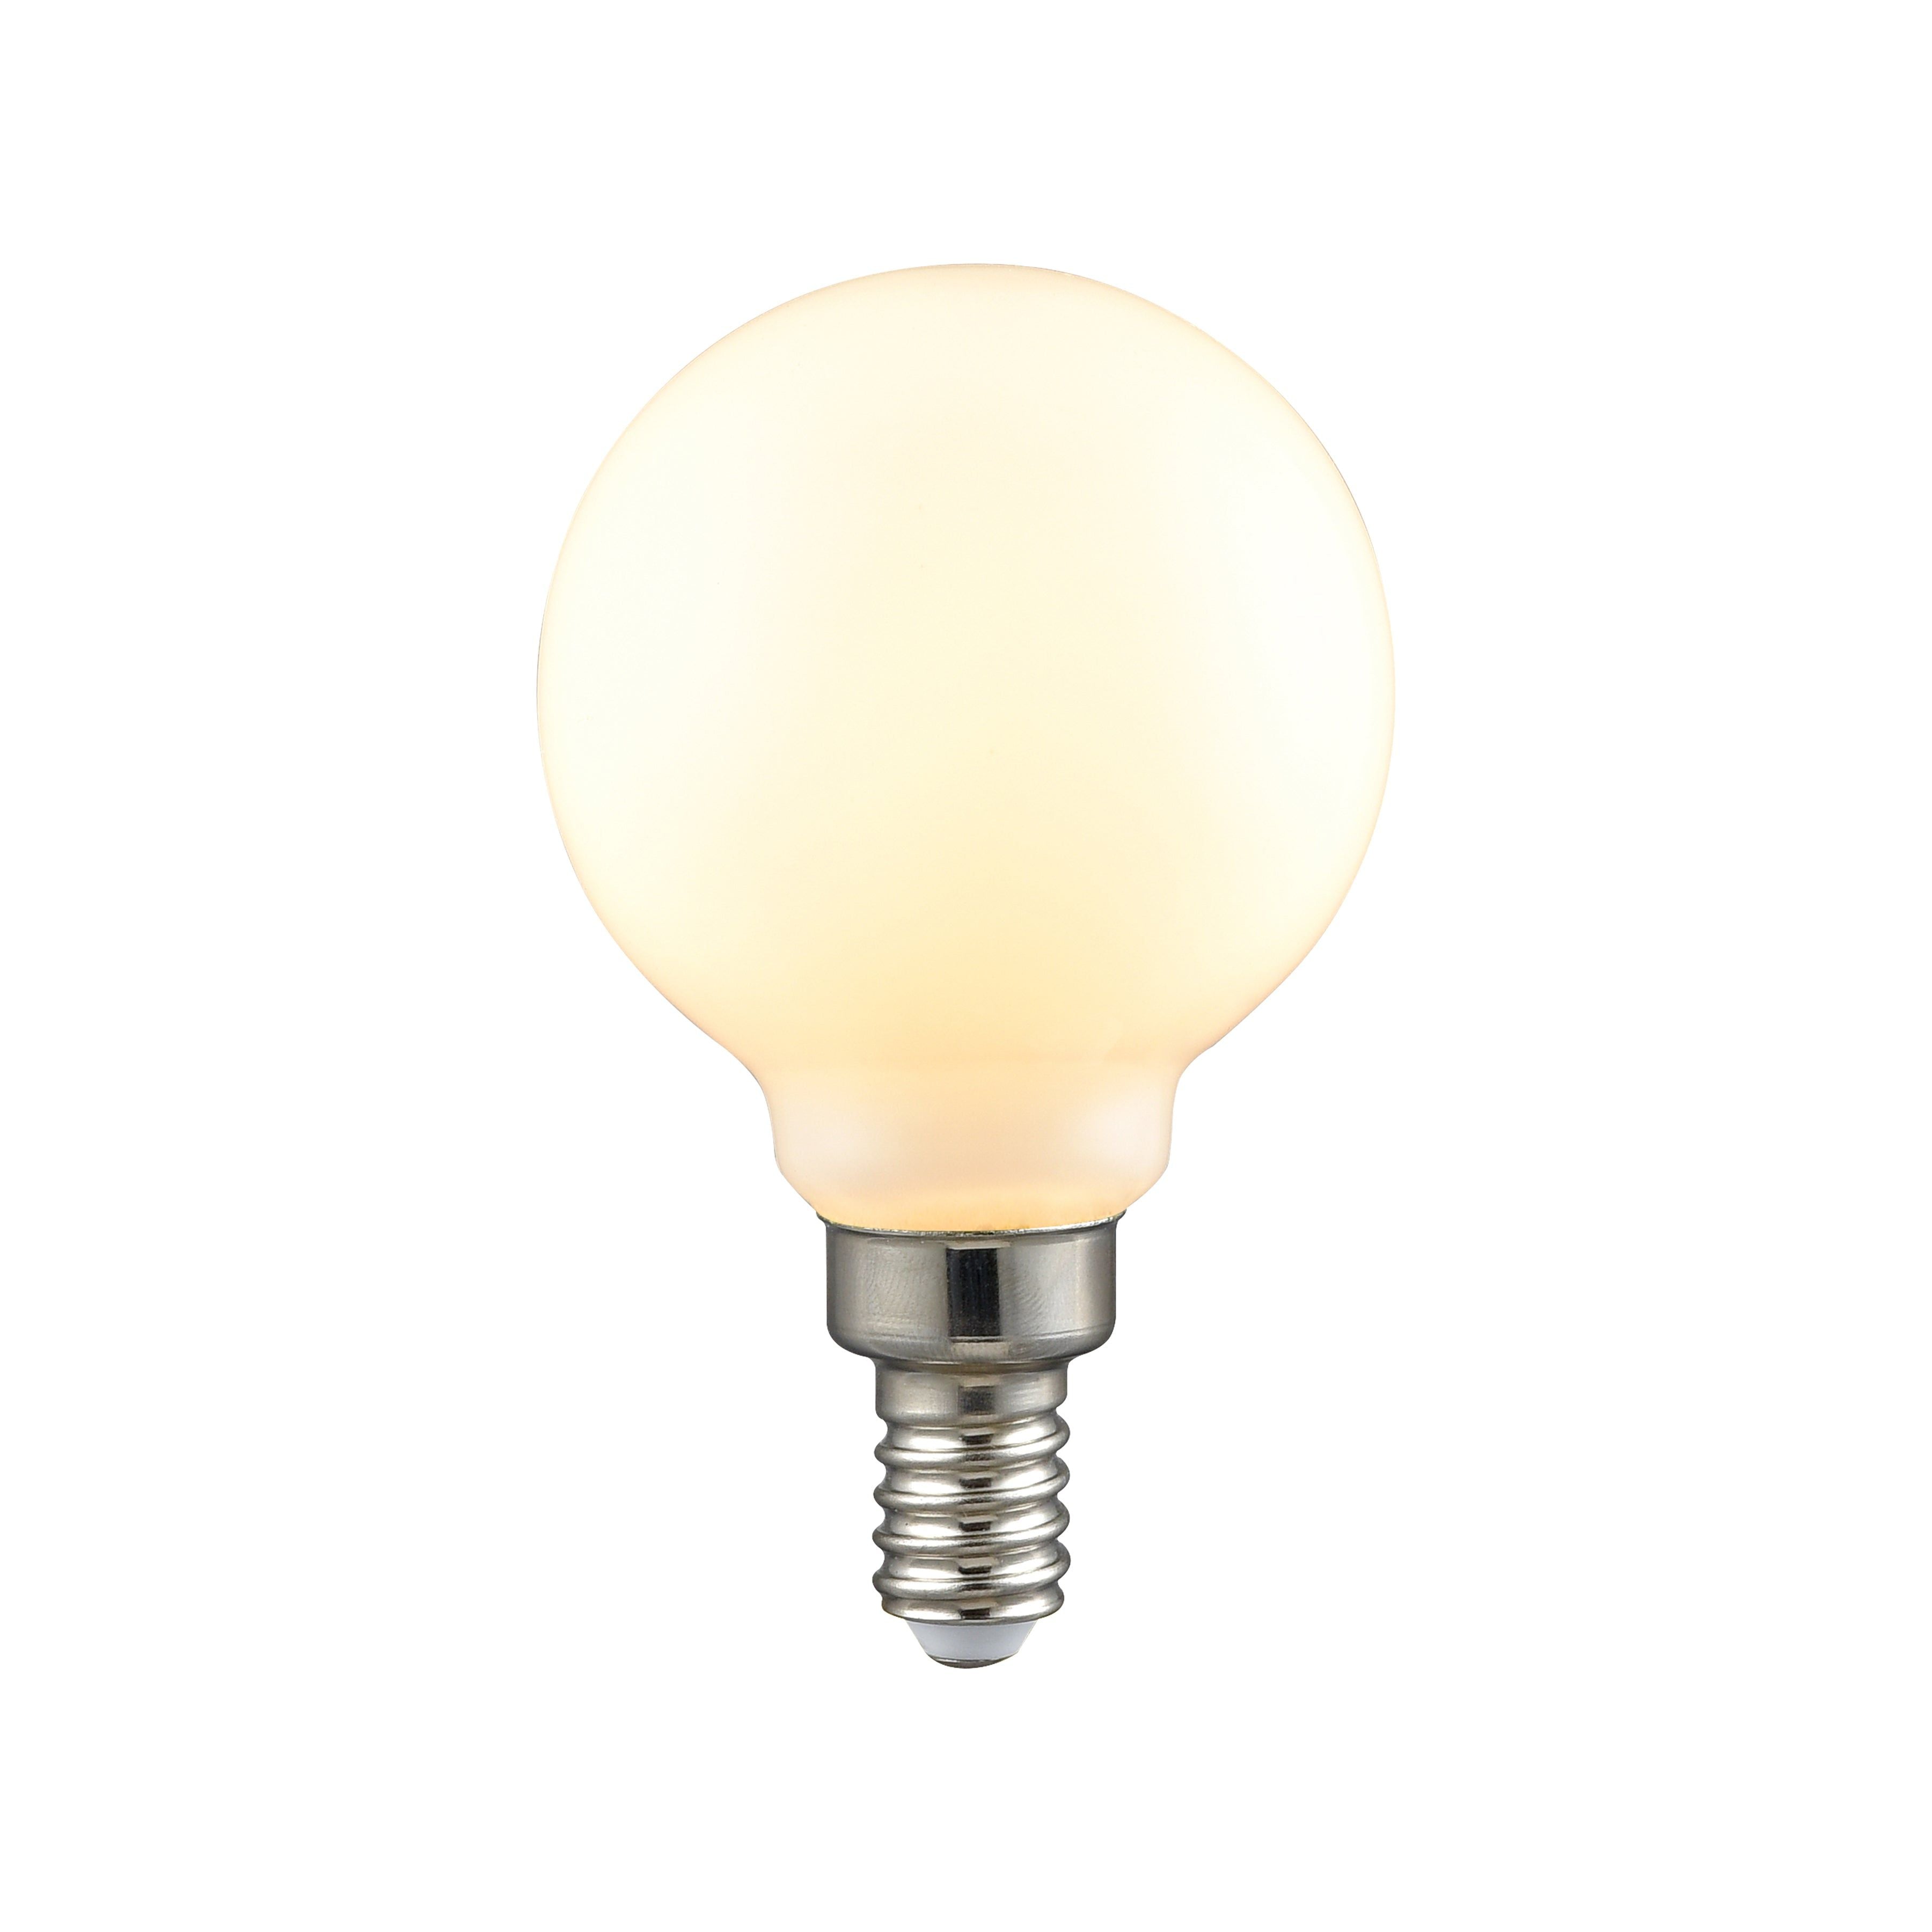 LED Candelabra Bulb - Shape G16.5 Base E12 2700K - Frosted